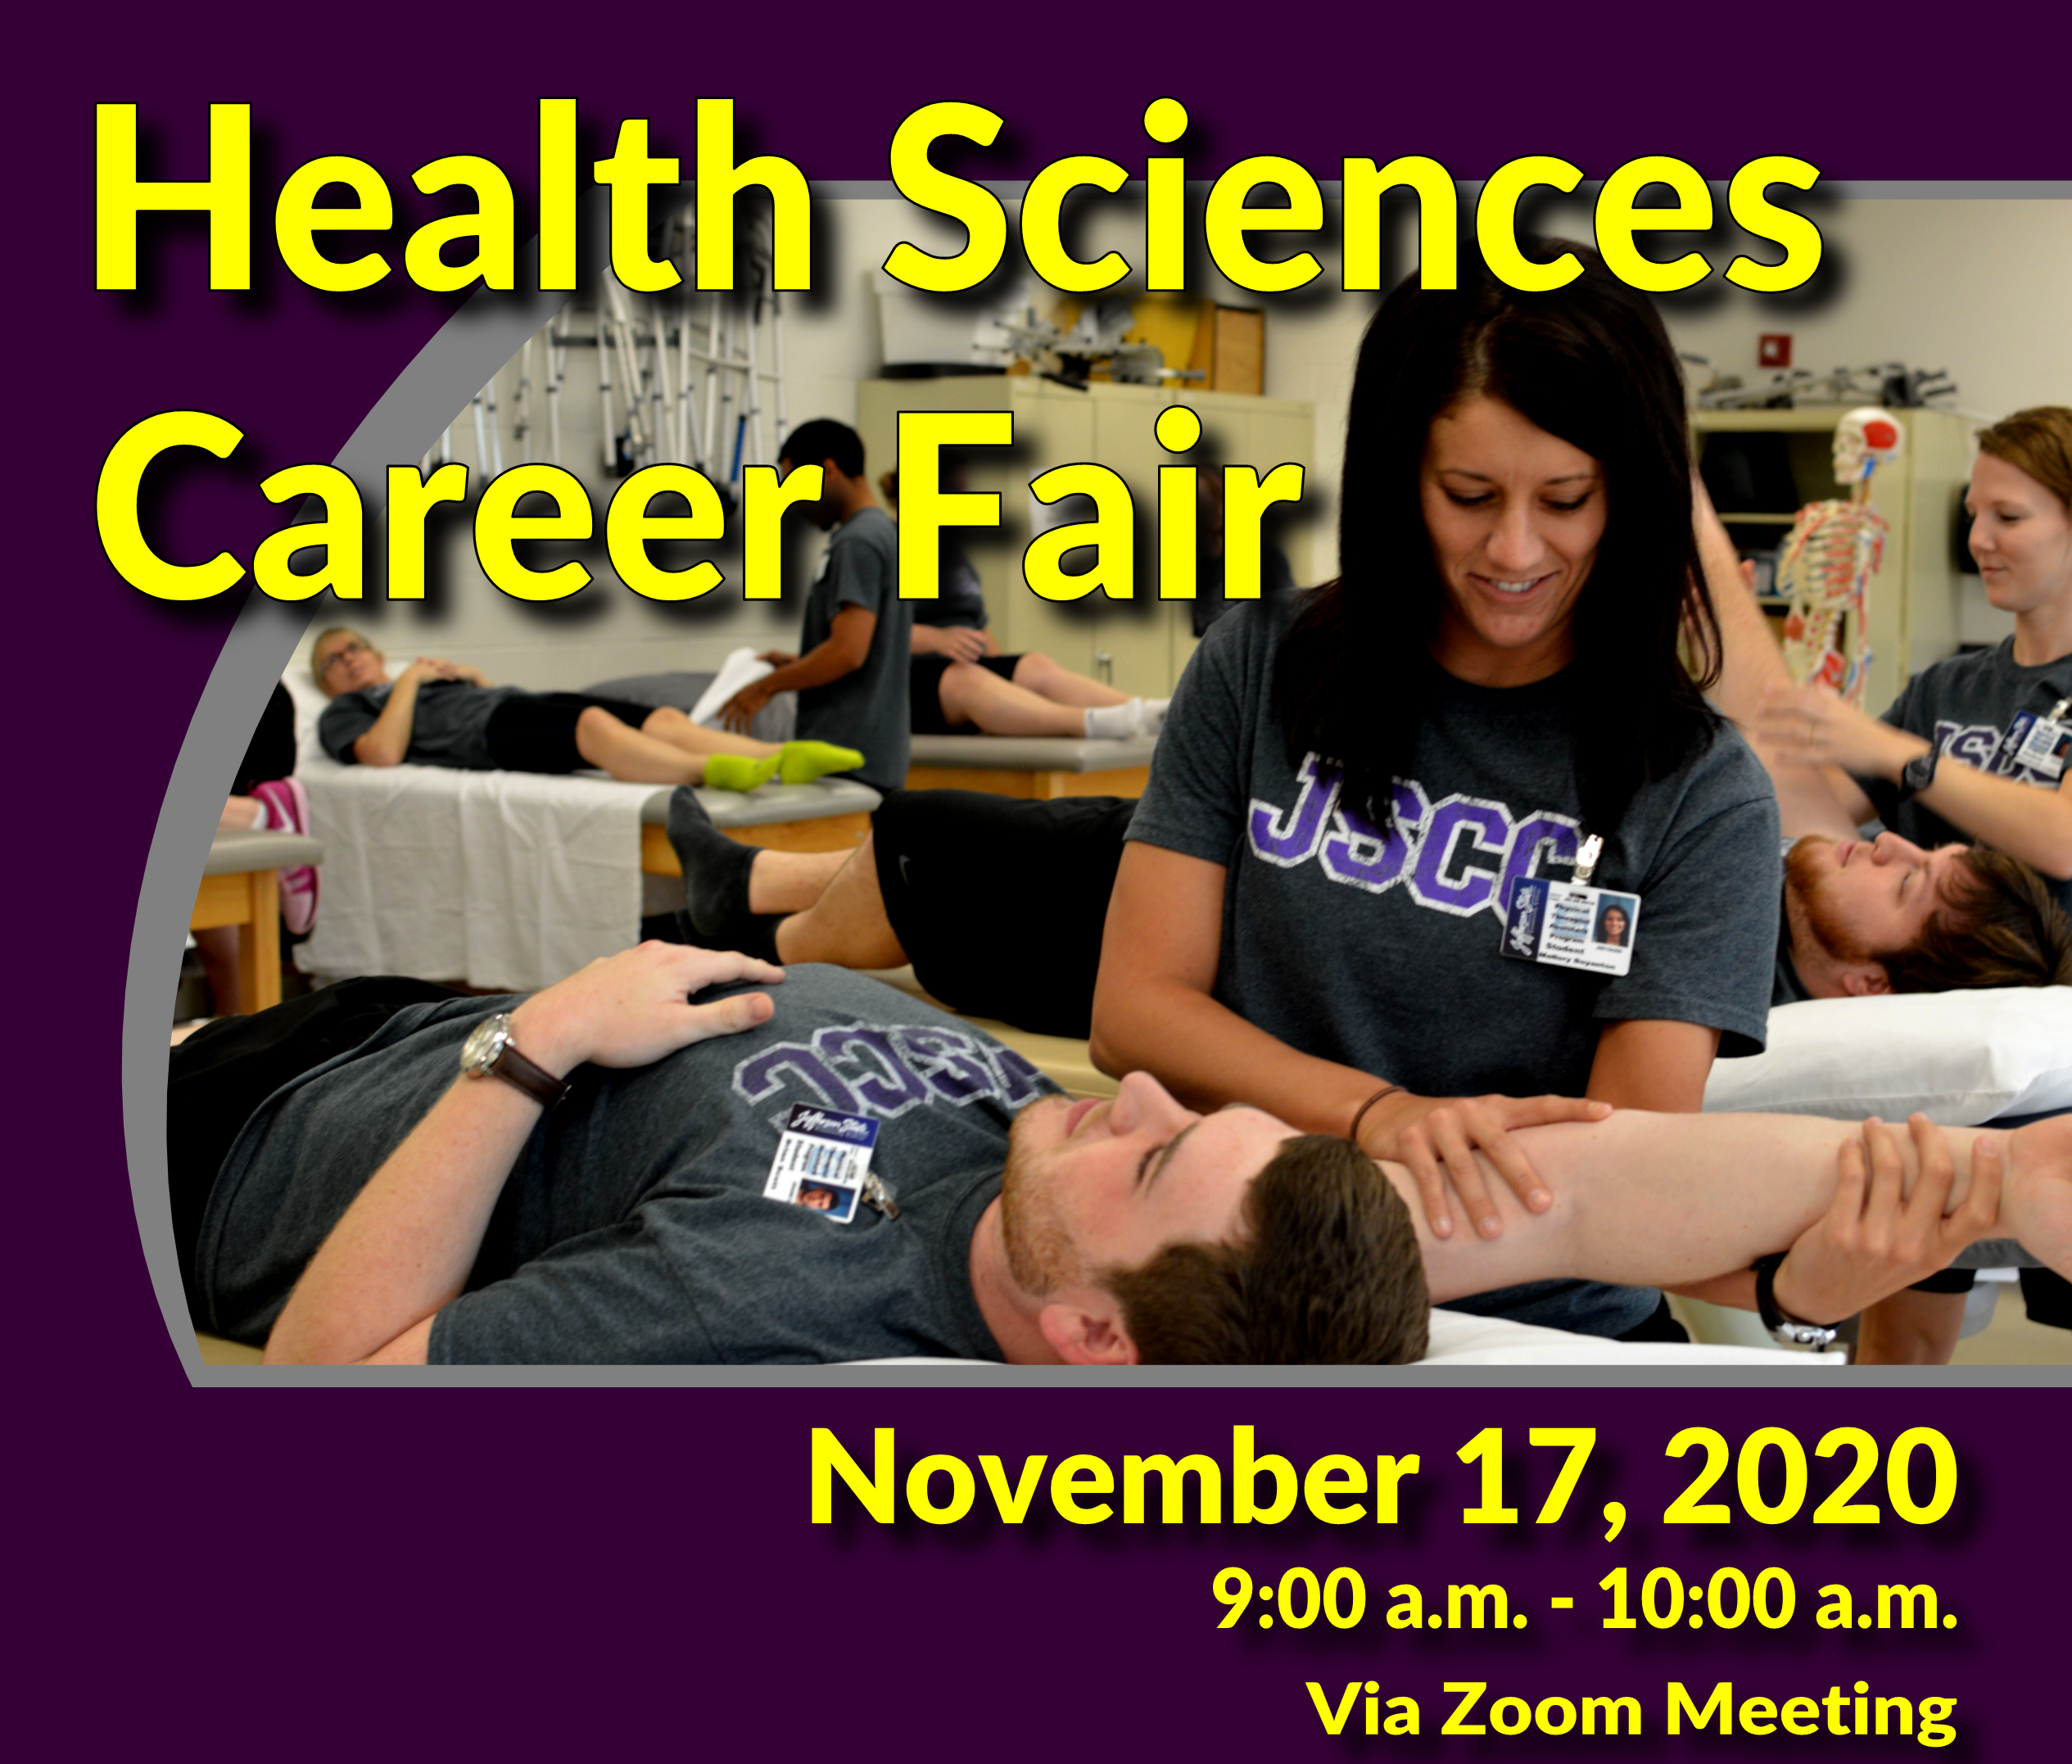 Health Sciences Career Fair Website image 2020